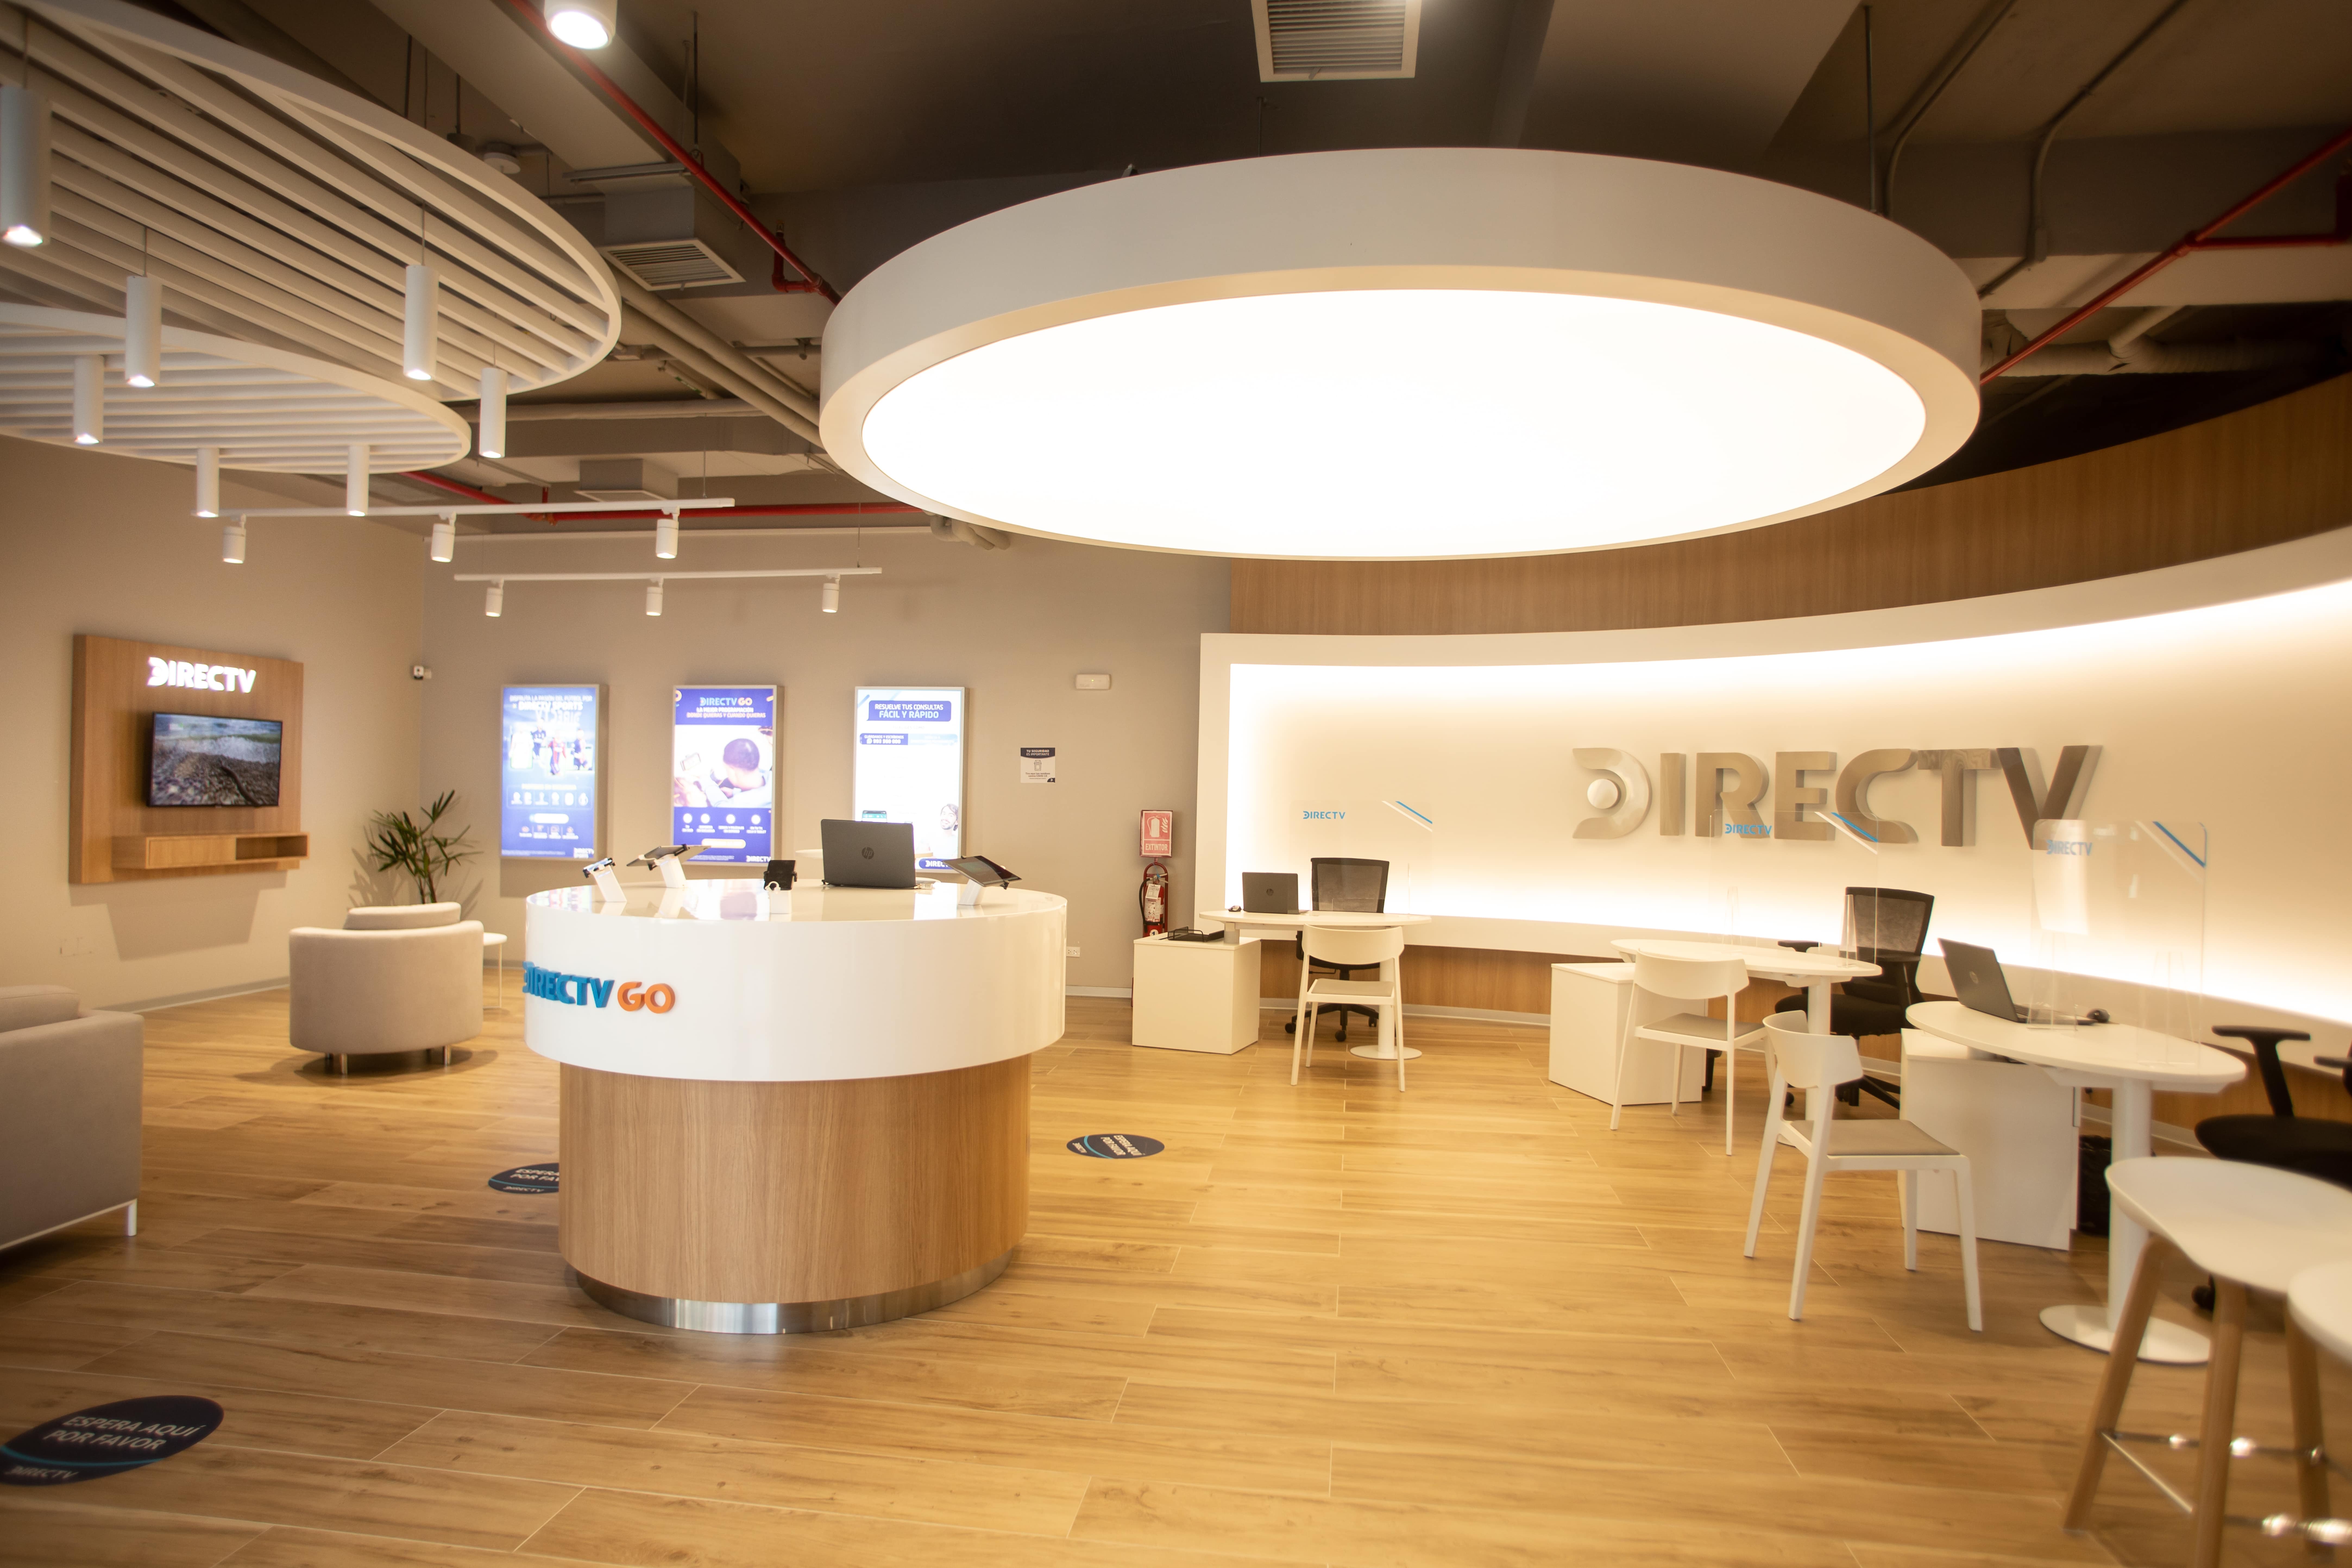 DirecTv inaugura centro de experiencia para clientes en Miraflores